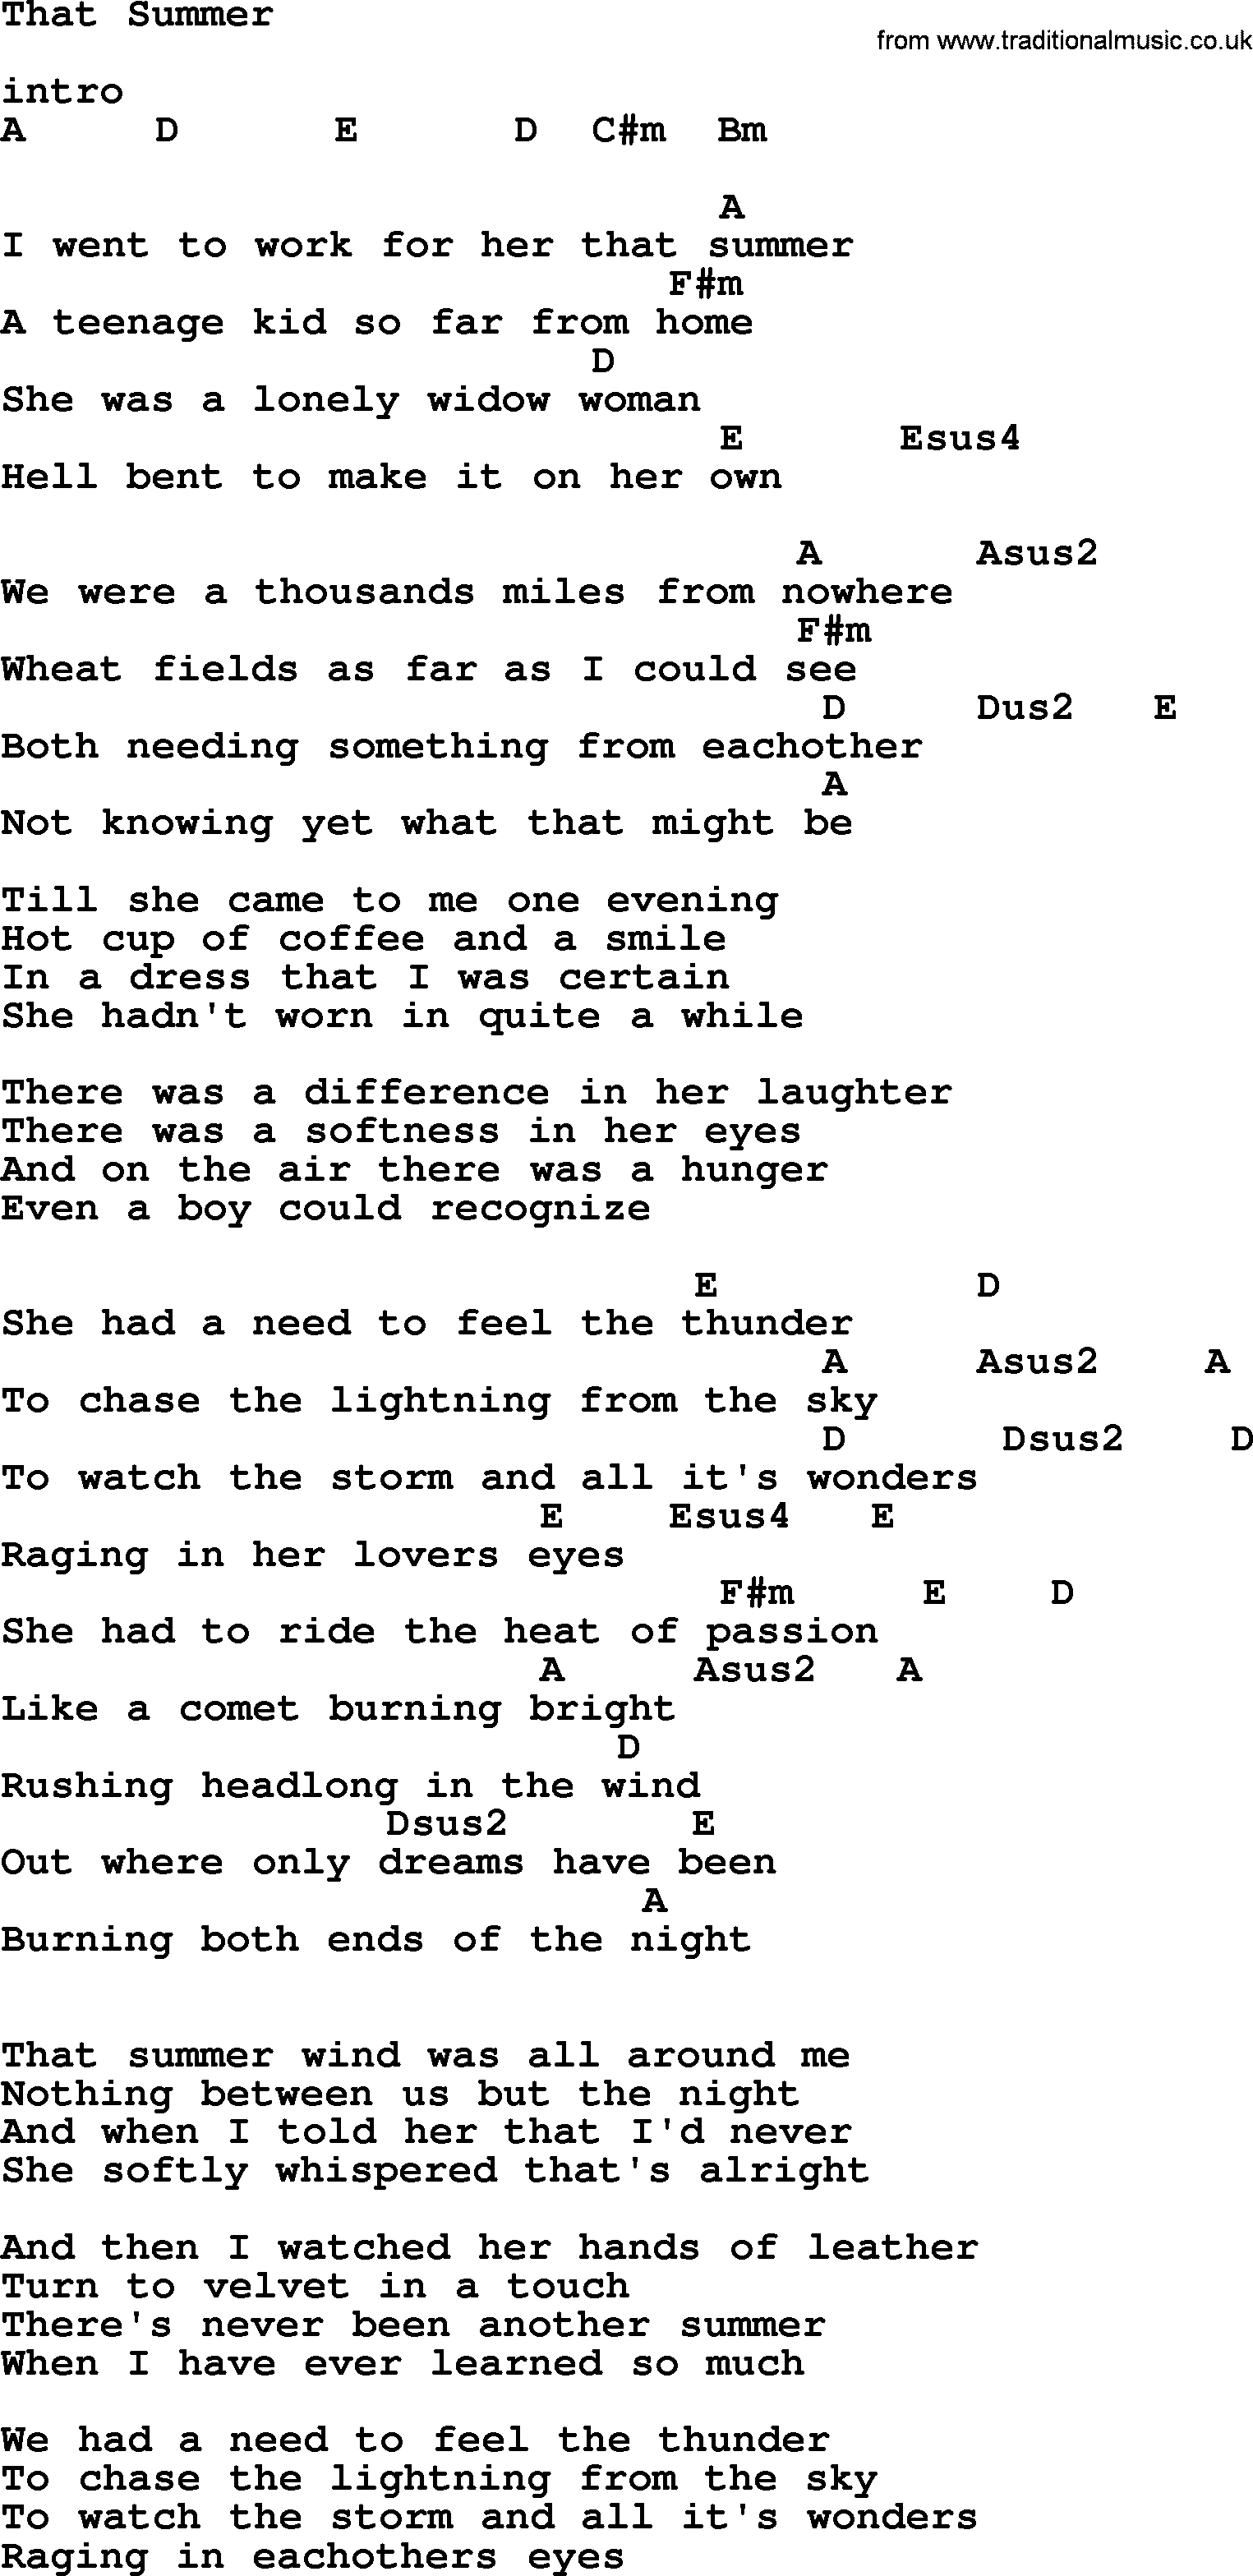 Garth Brooks song: That Summer, lyrics and chords